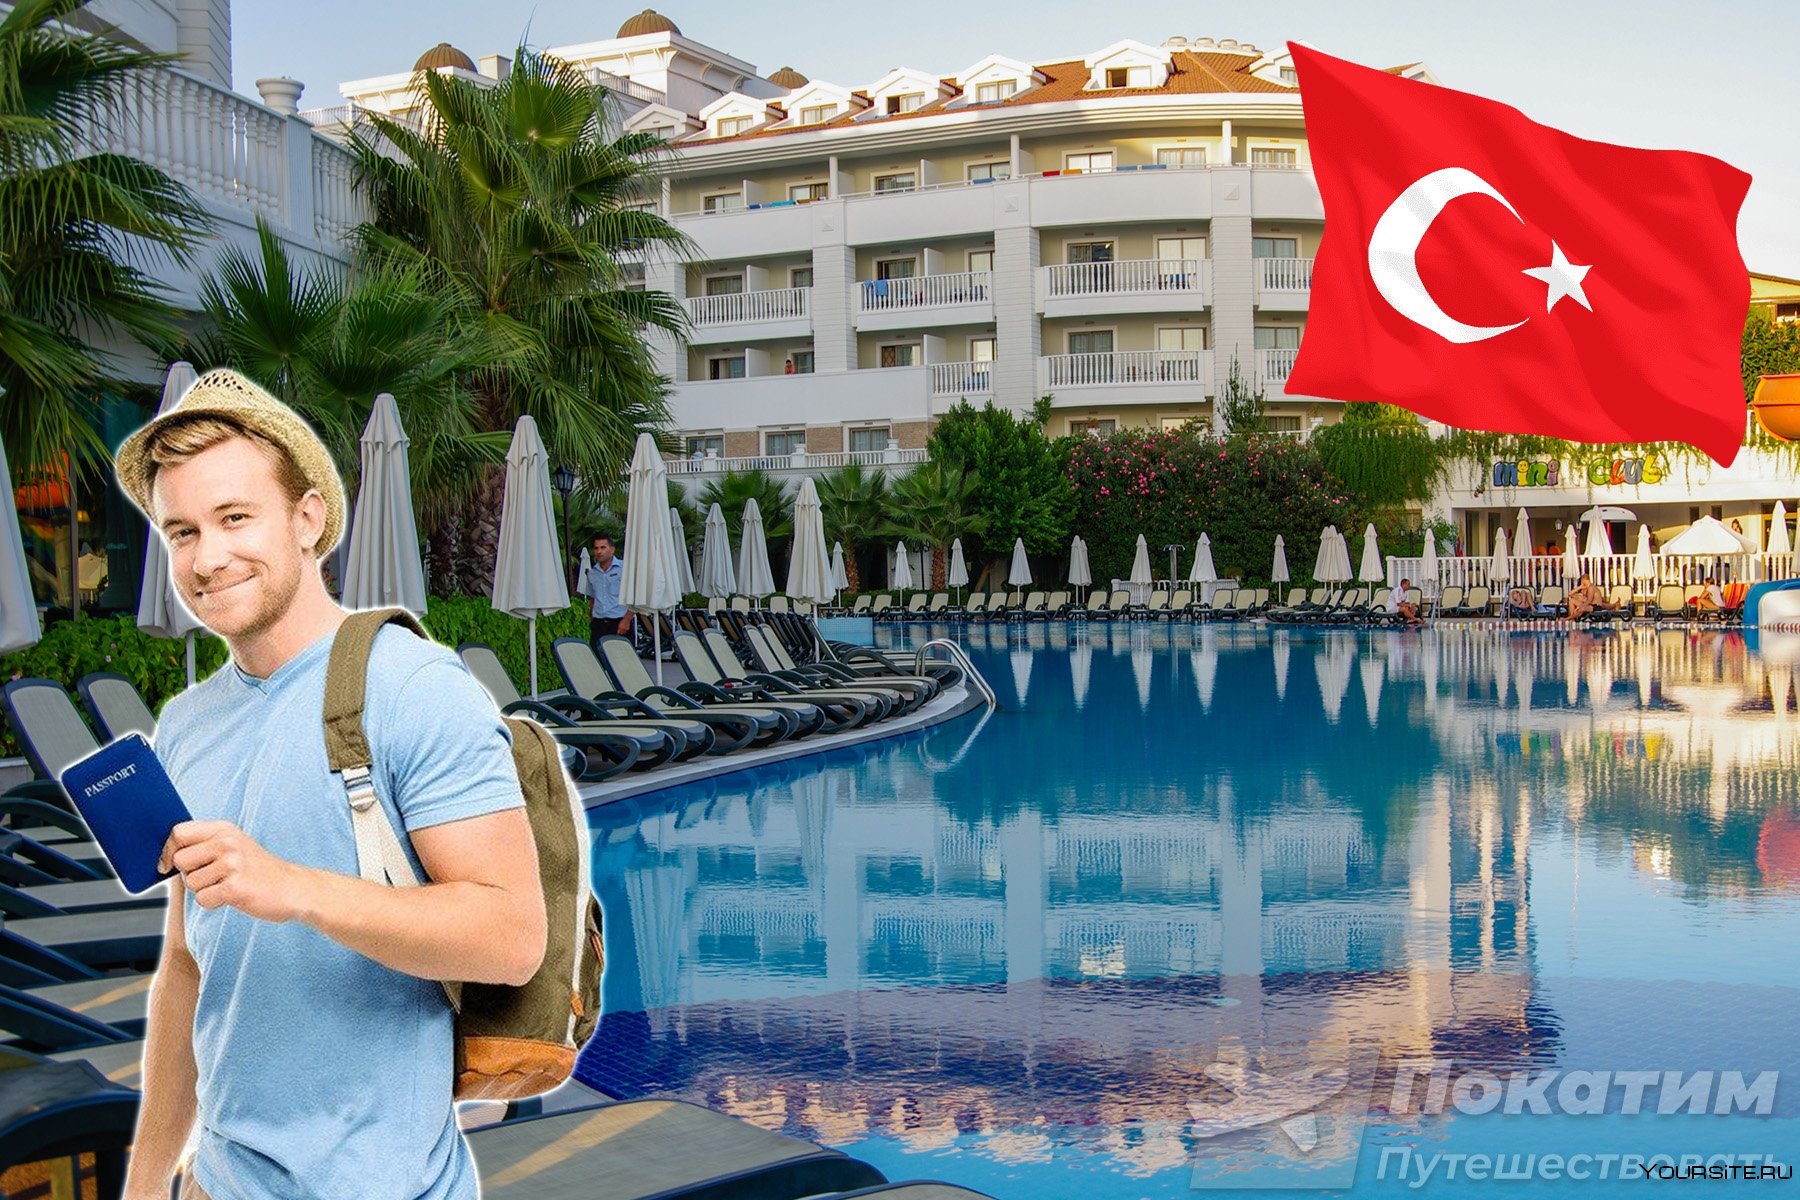 Travel турция. Туристы в Турции. Турция туризм. Путешествие в Турцию. Турция туризм туристы.